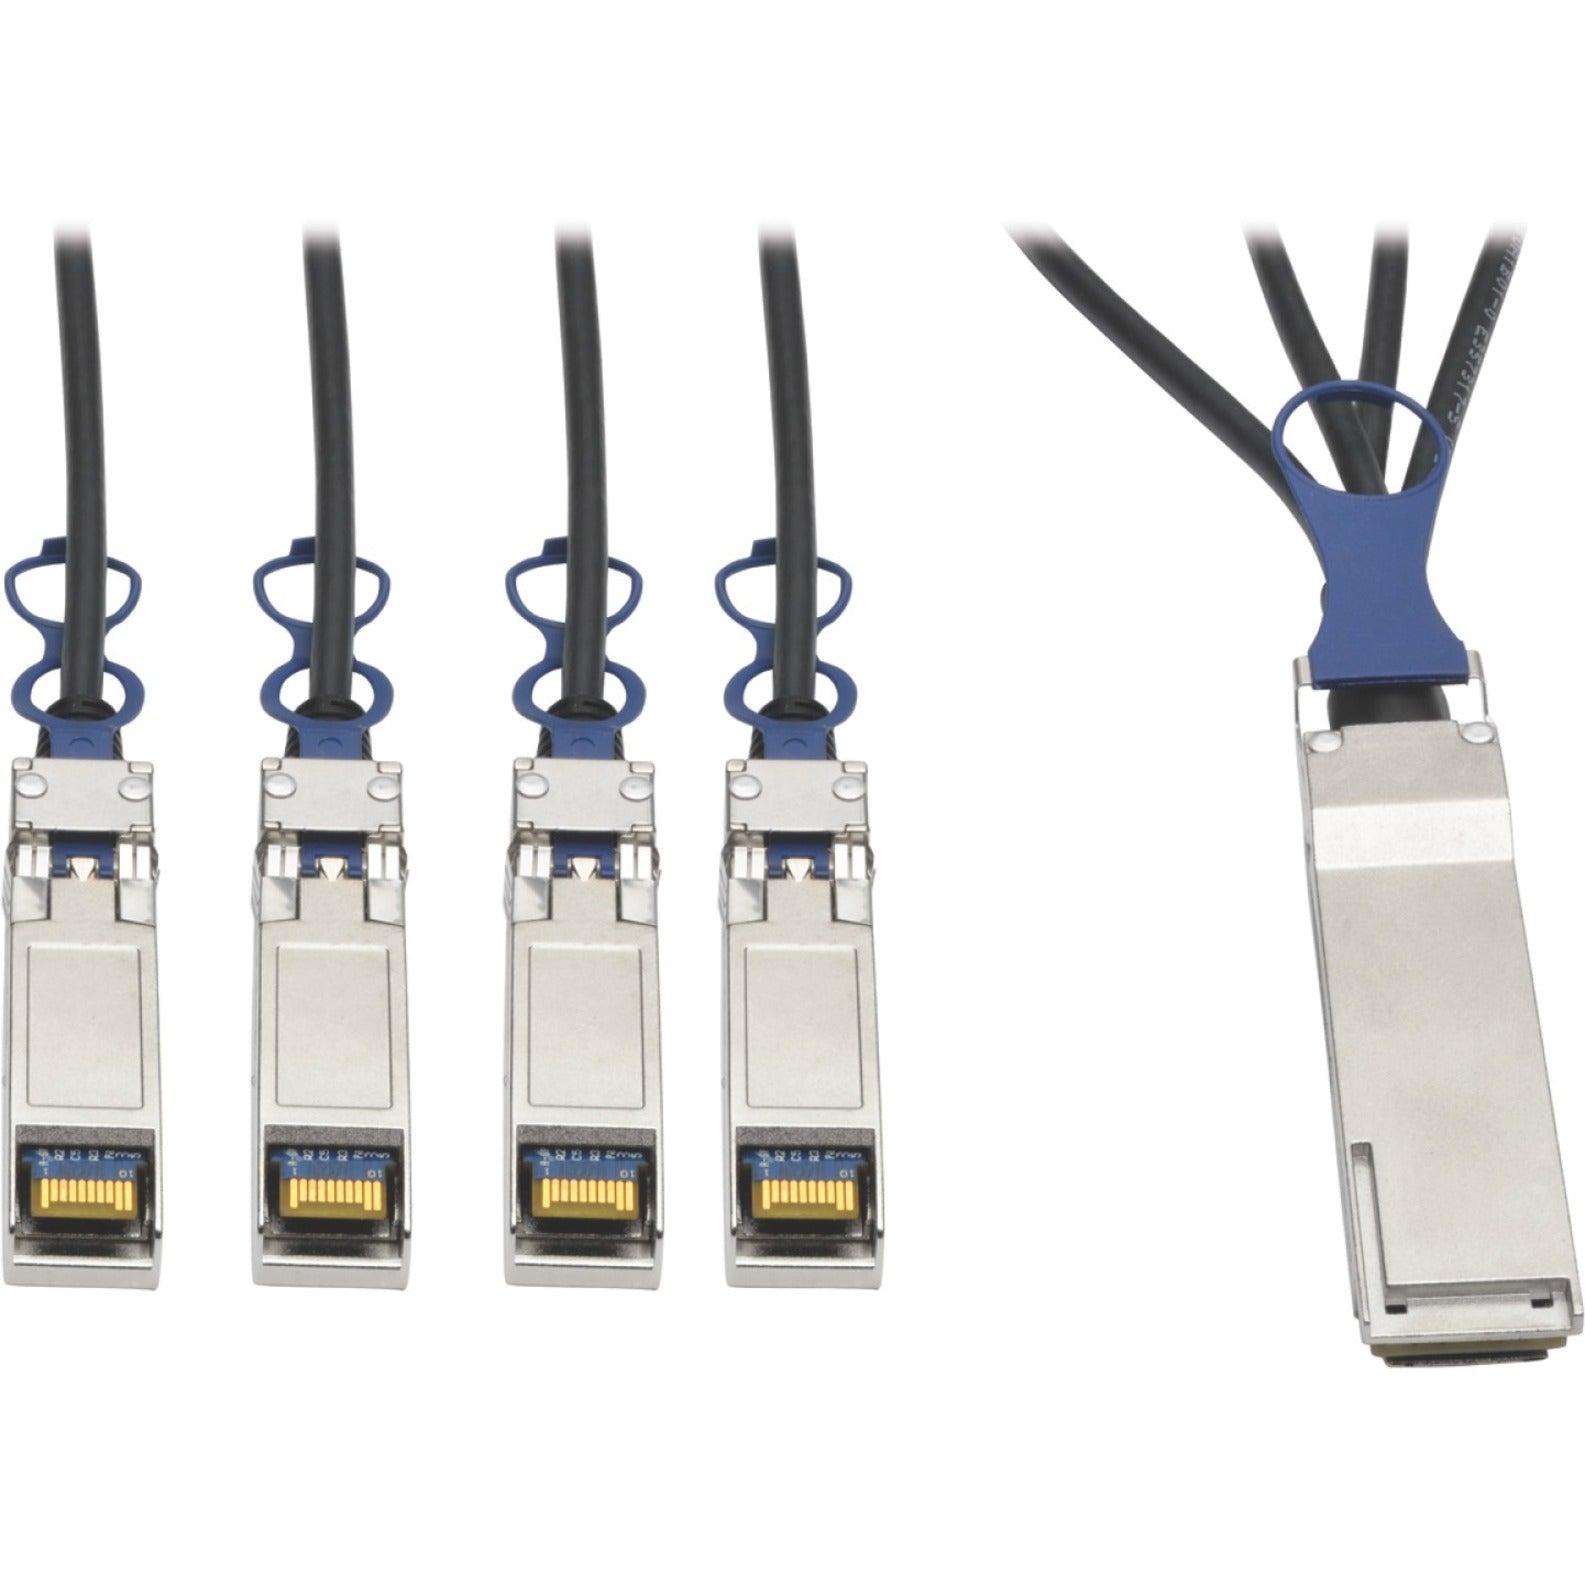 Tripp Lite N281-03M-BK QSFP+/SFP+ 网络电缆，10 英尺，被动式，柔韧，EMI/RF 保护，串扰保护 Tripp Lite的品牌名称为 通实达.